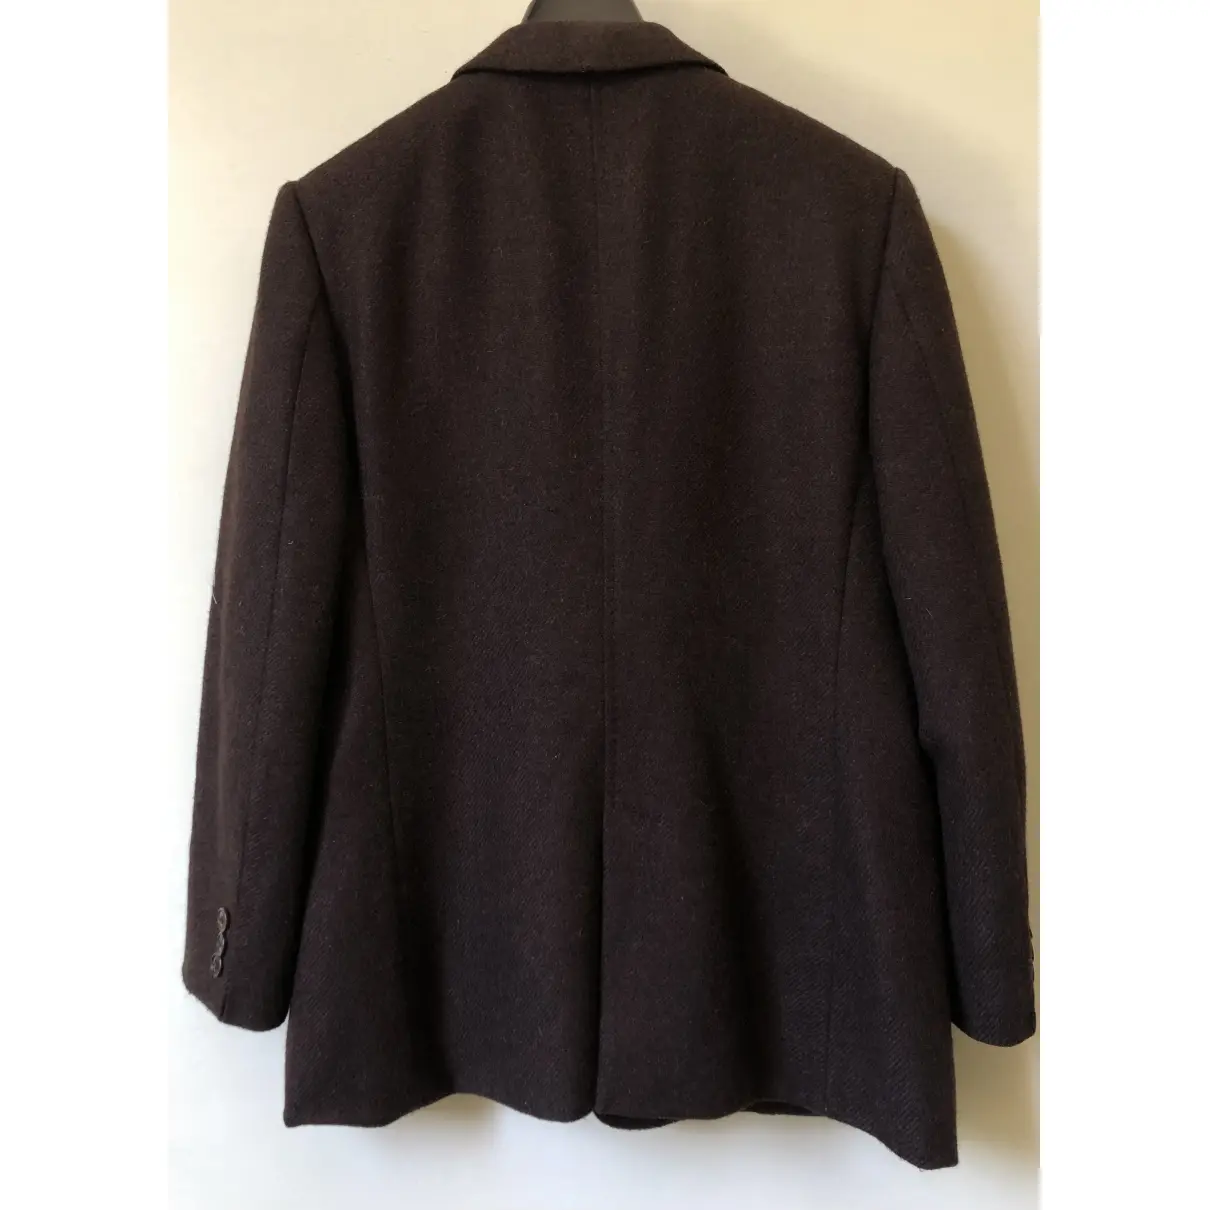 Buy Burberry Wool blazer online